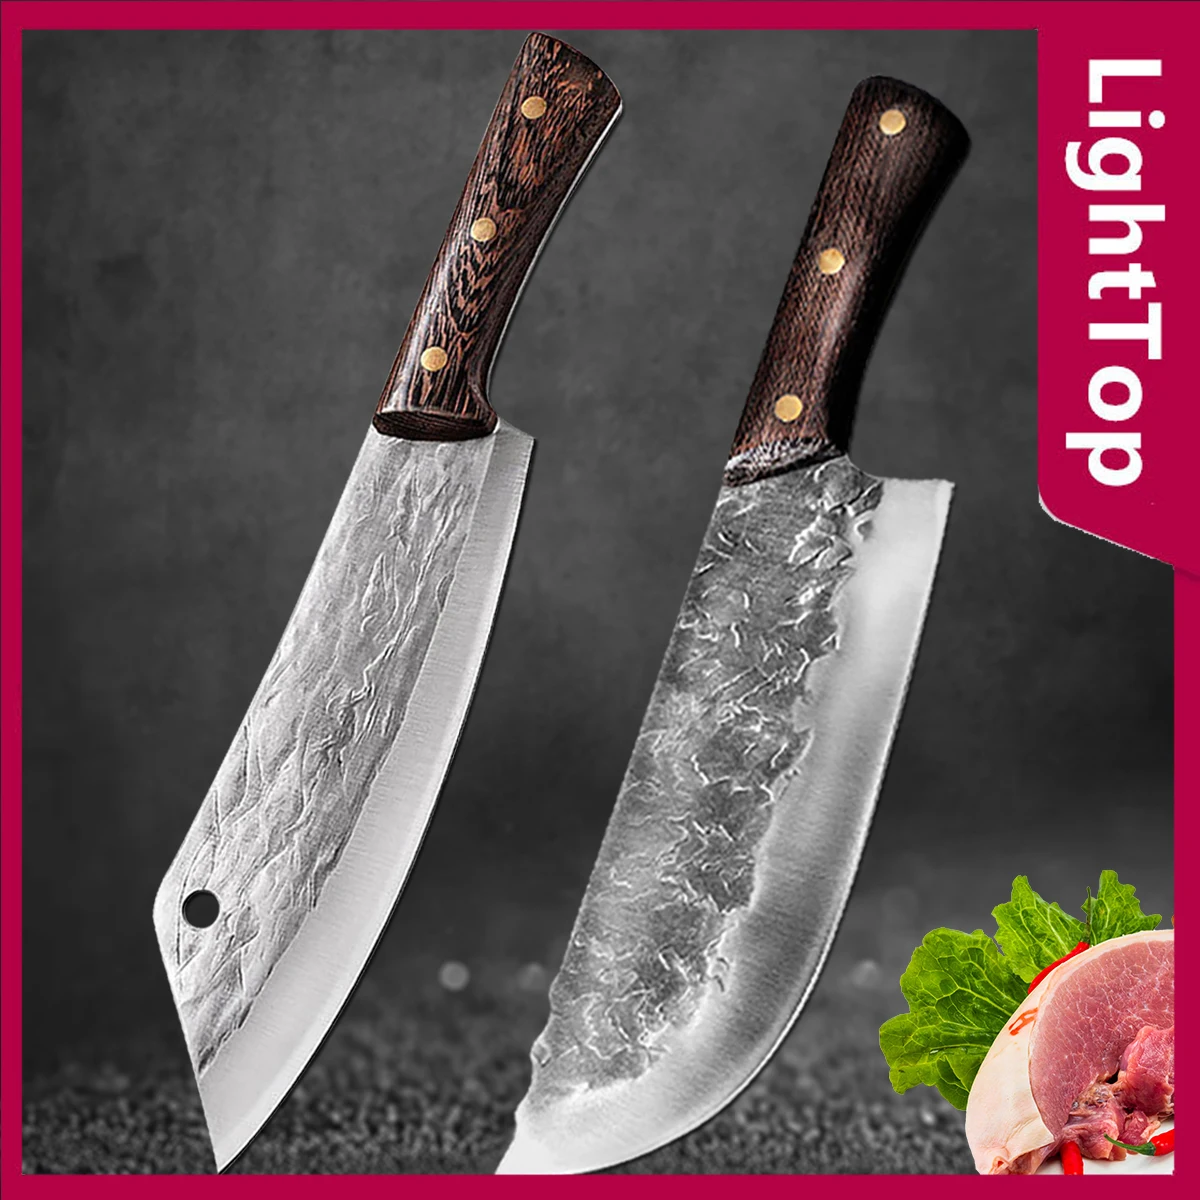 https://ae01.alicdn.com/kf/S9f0a7586ea0c497c9dd0253b278220c82/Professional-Forged-Knife-Stainless-Steel-Meat-Vegetables-Slicer-Butcher-Cleaver-Handmade-Knife-Chef-Knife-Set-Knives.jpg